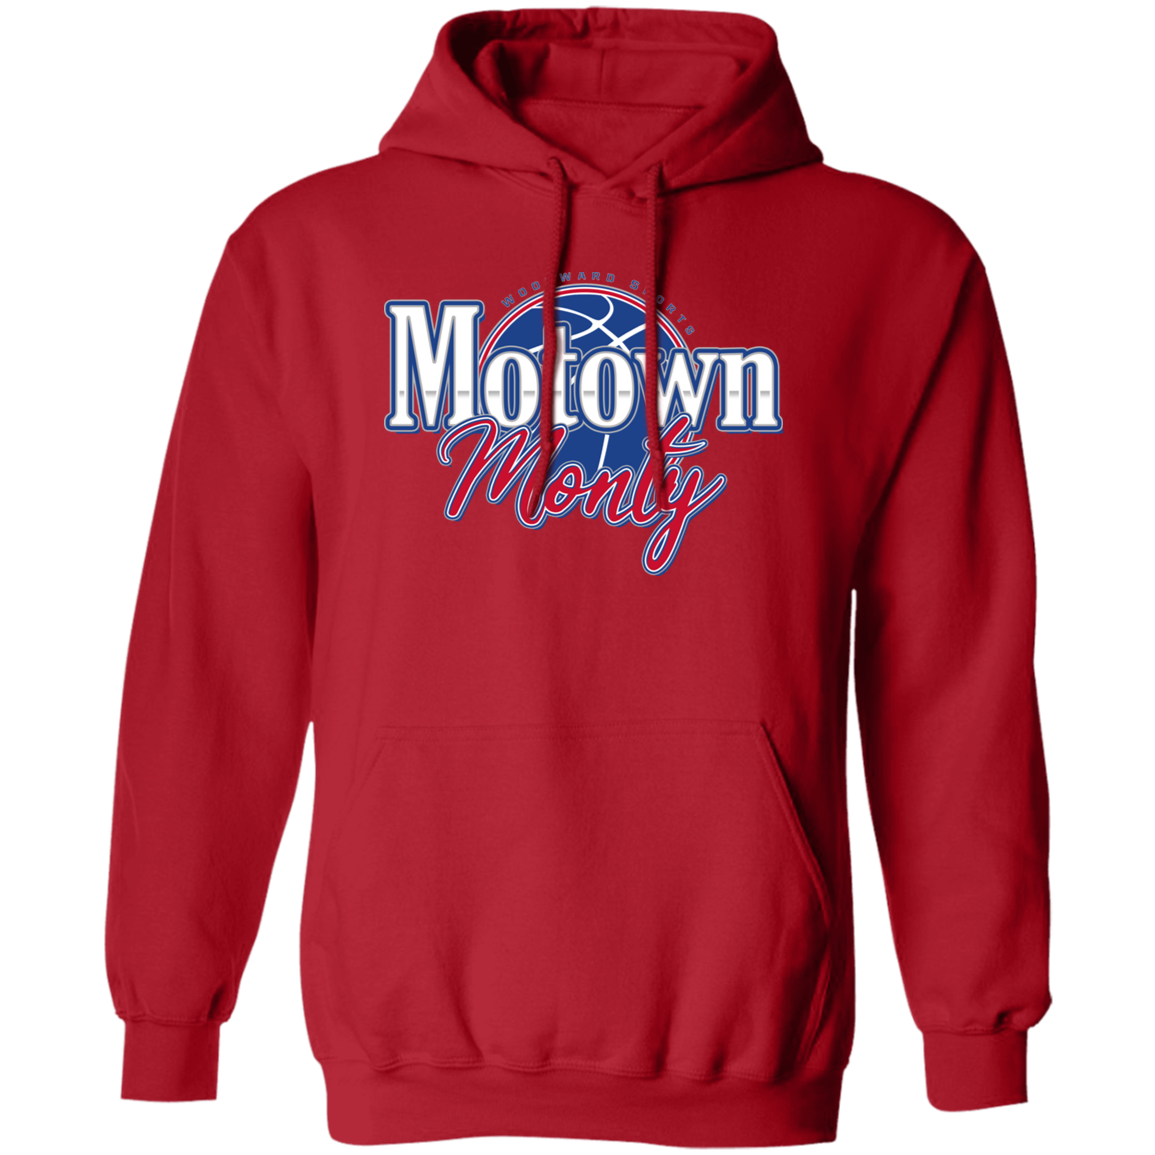 Motown Monty Sweatshirt